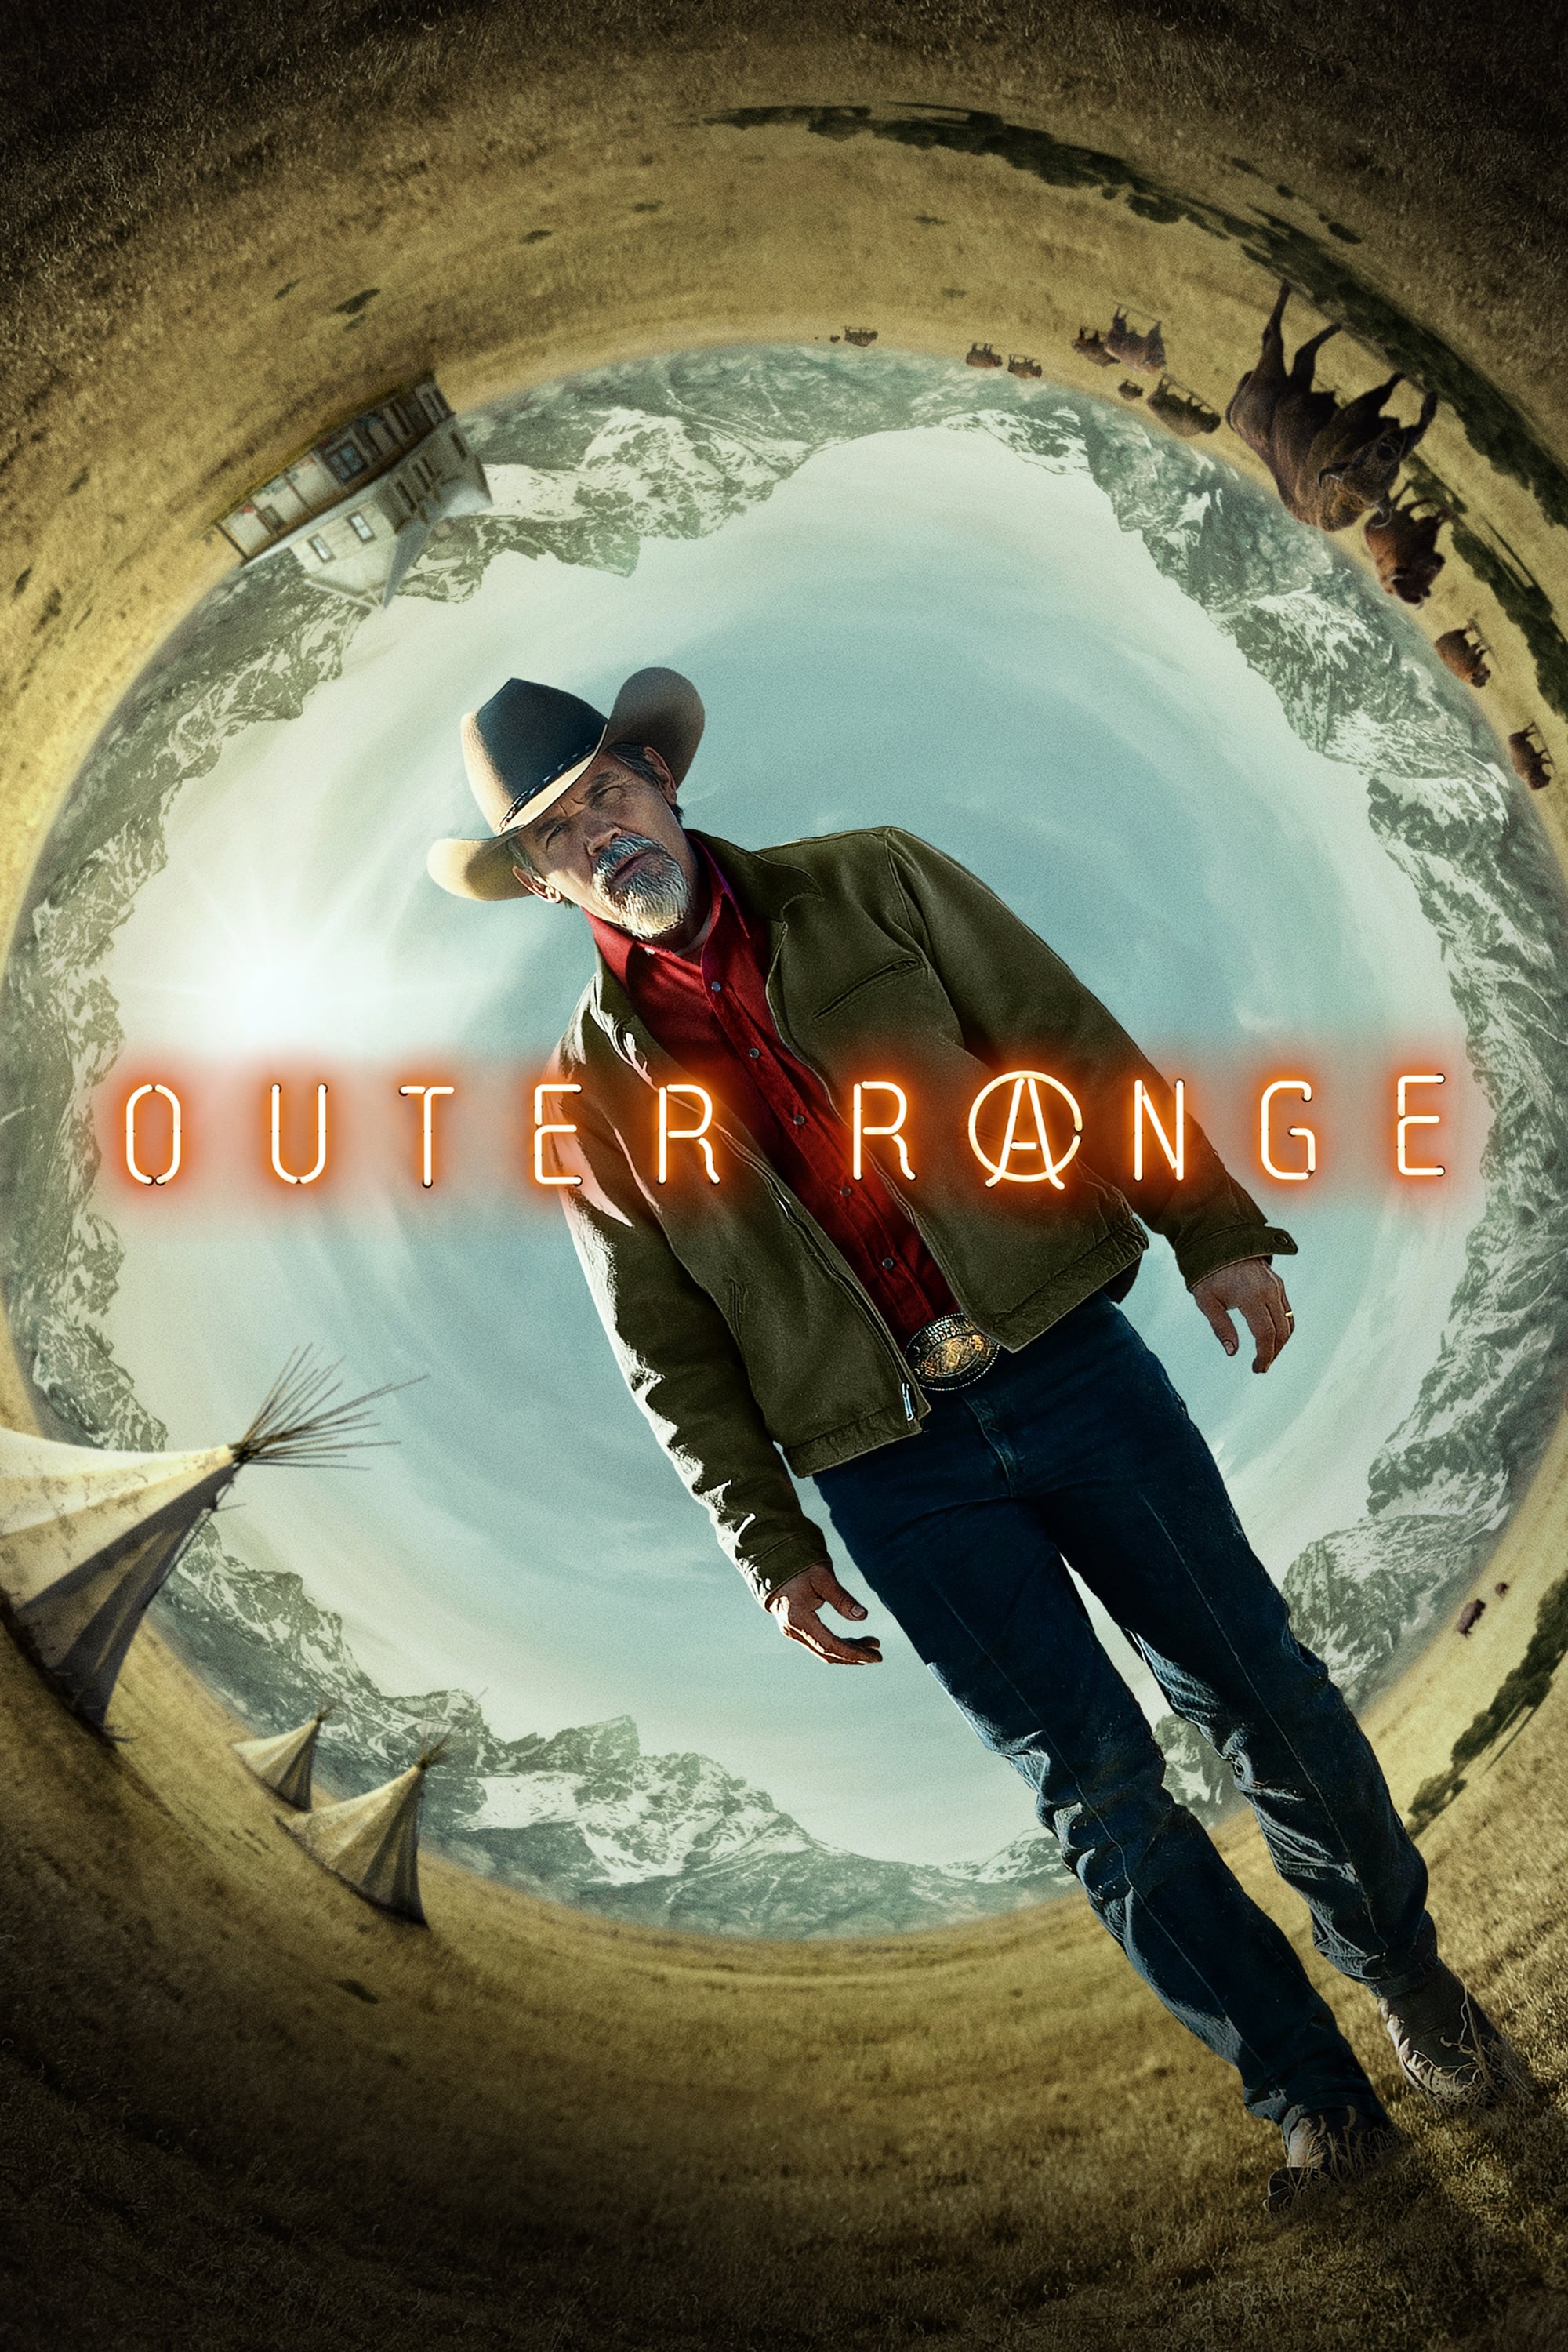 Outer Range (2022)